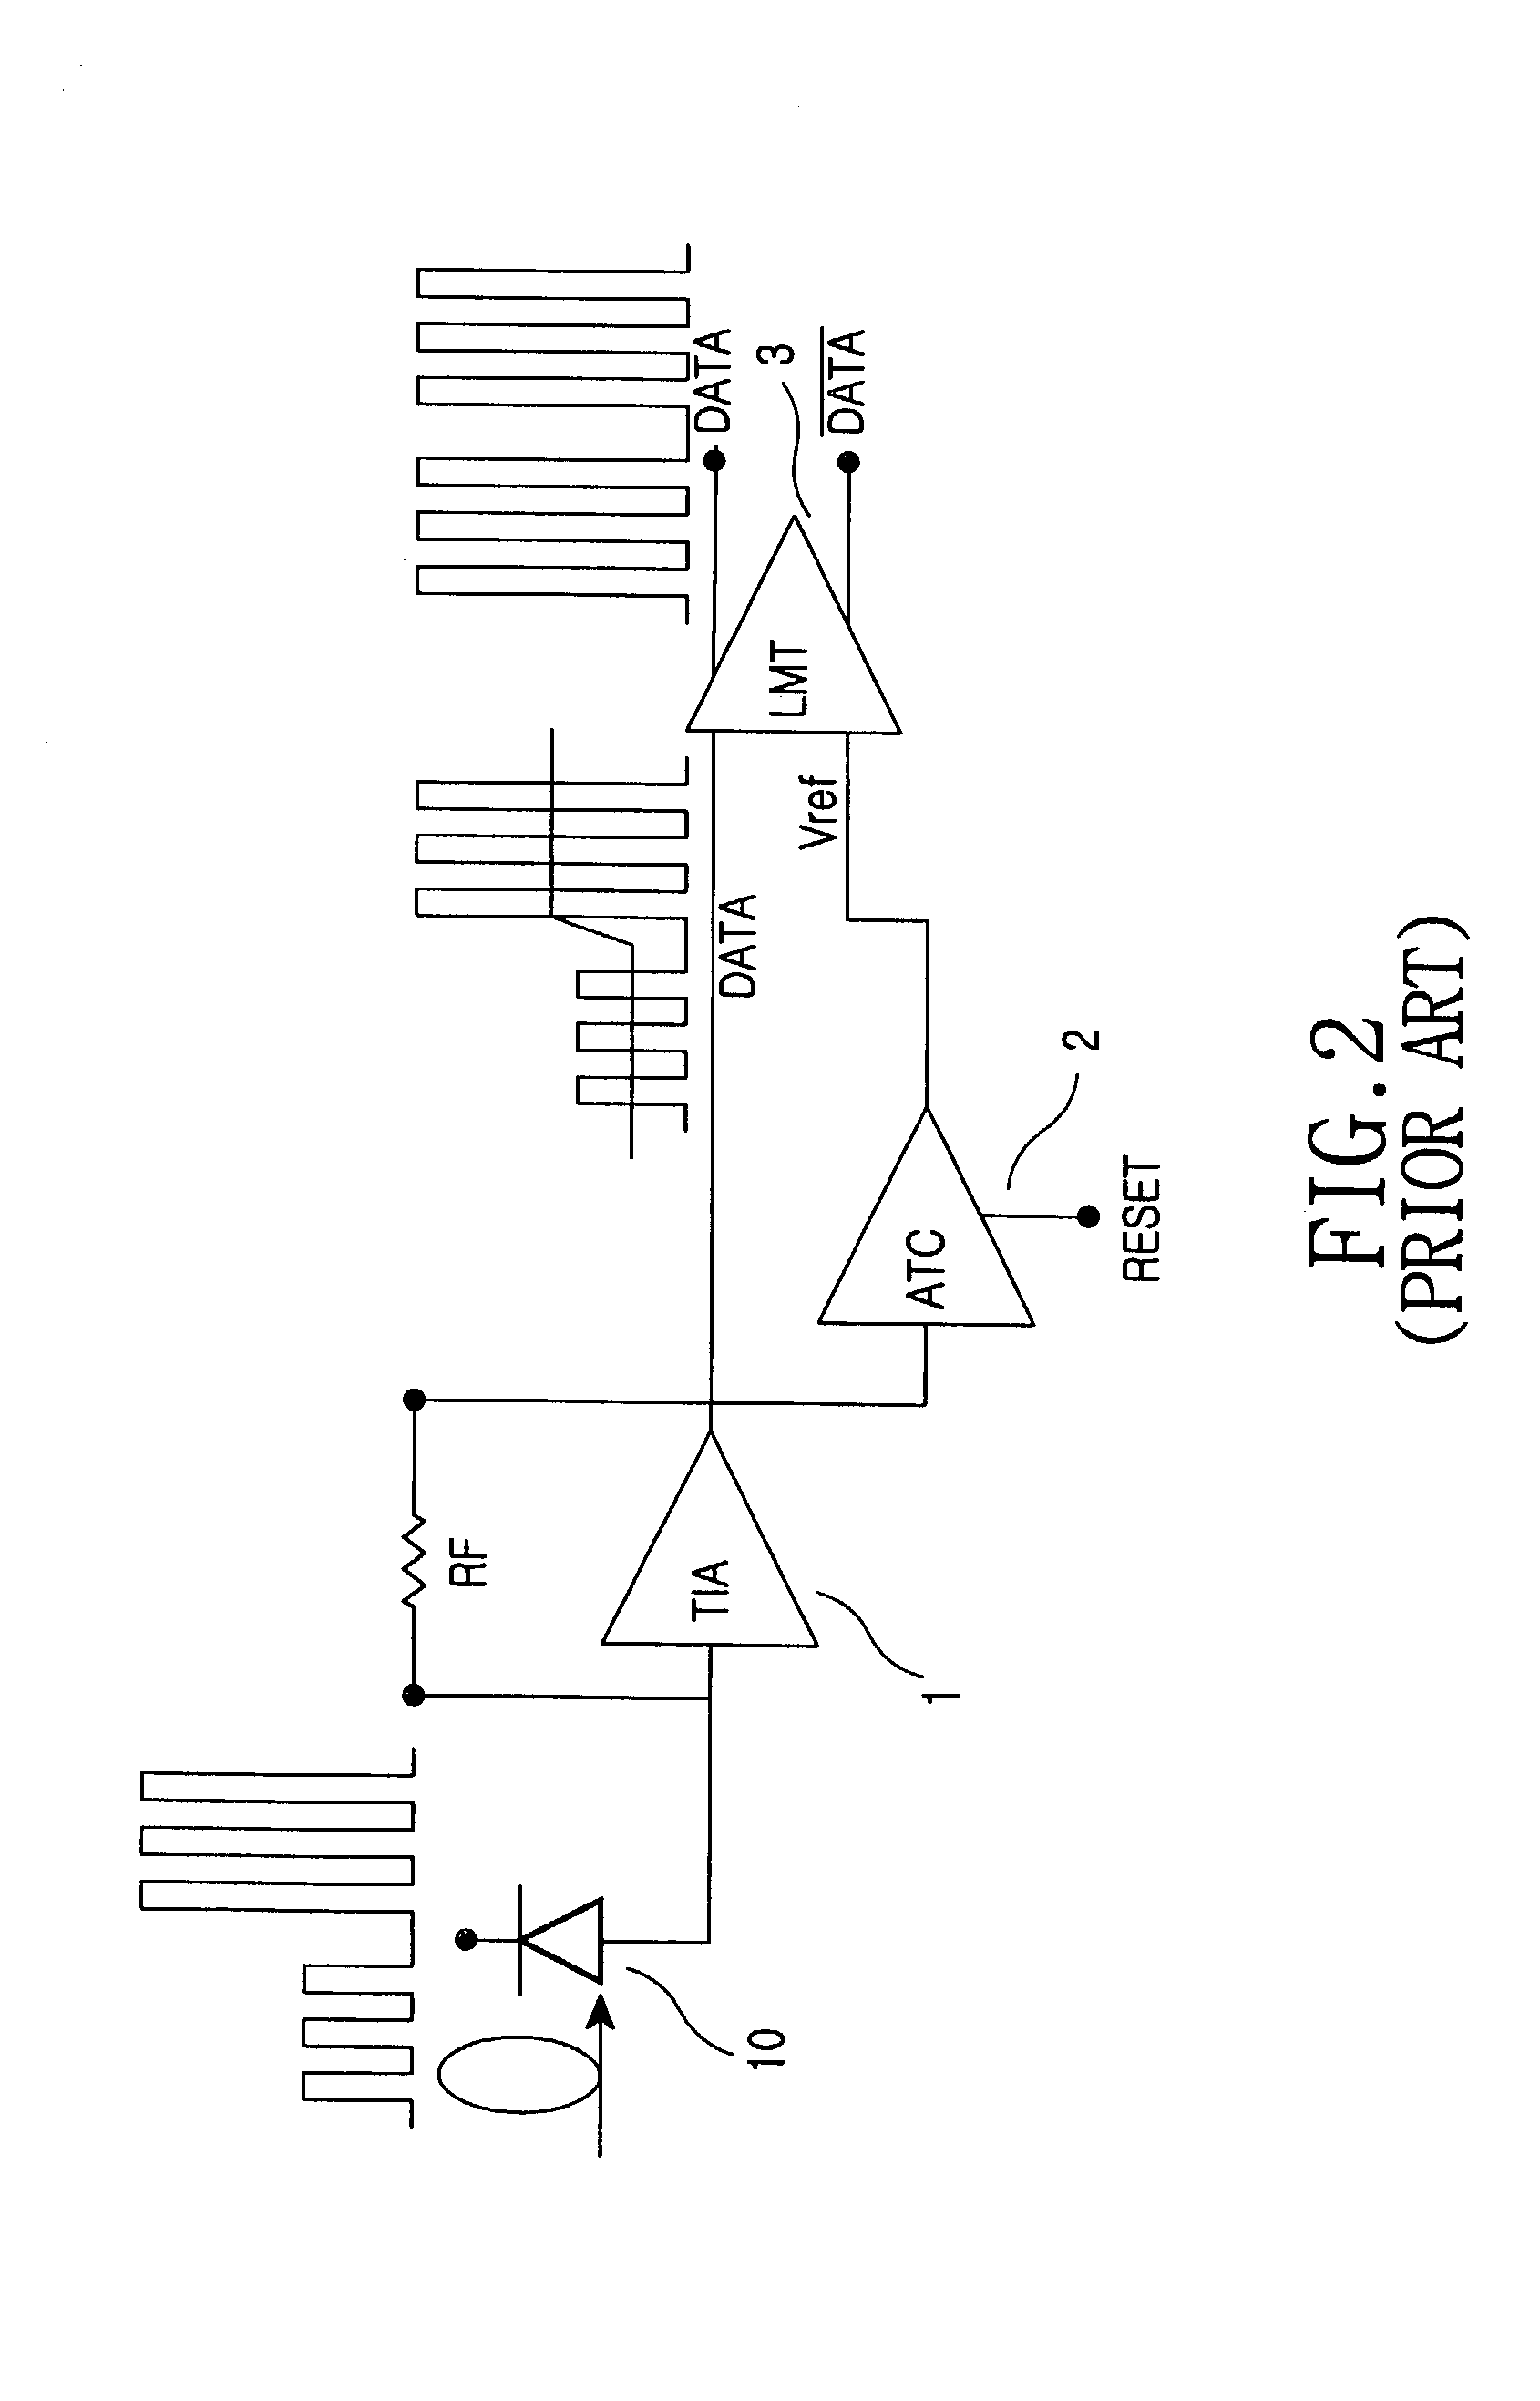 Bottom level detection device for burst mode optical receiver